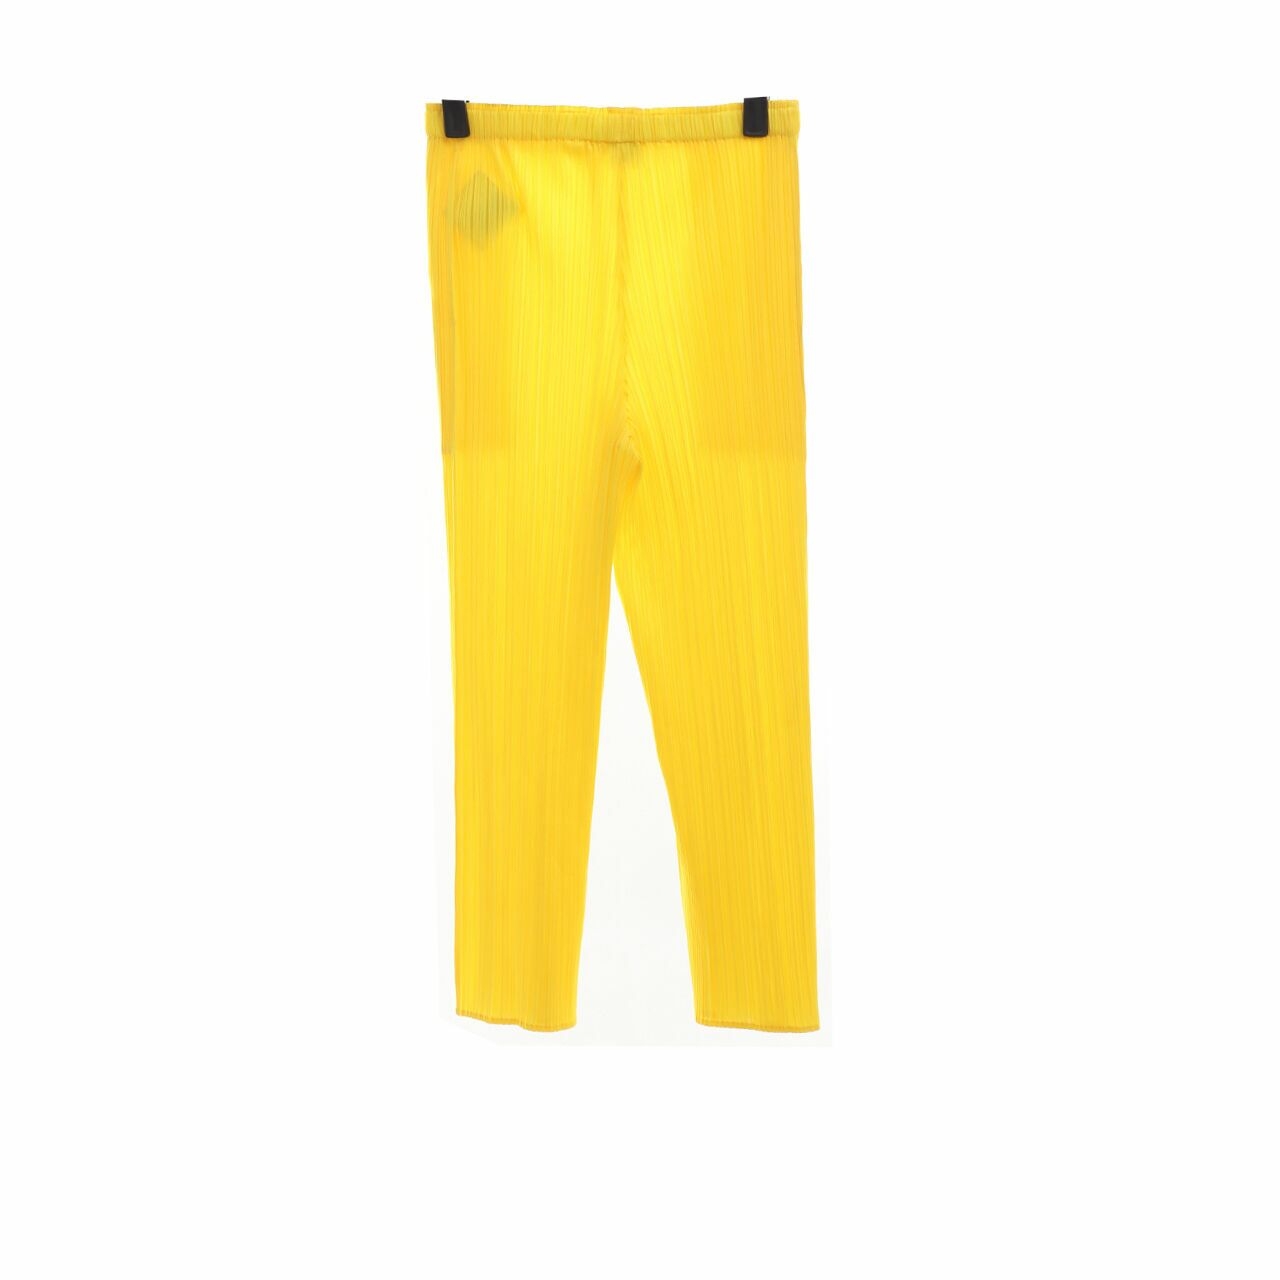 Pleats Please Yellow Long Pants